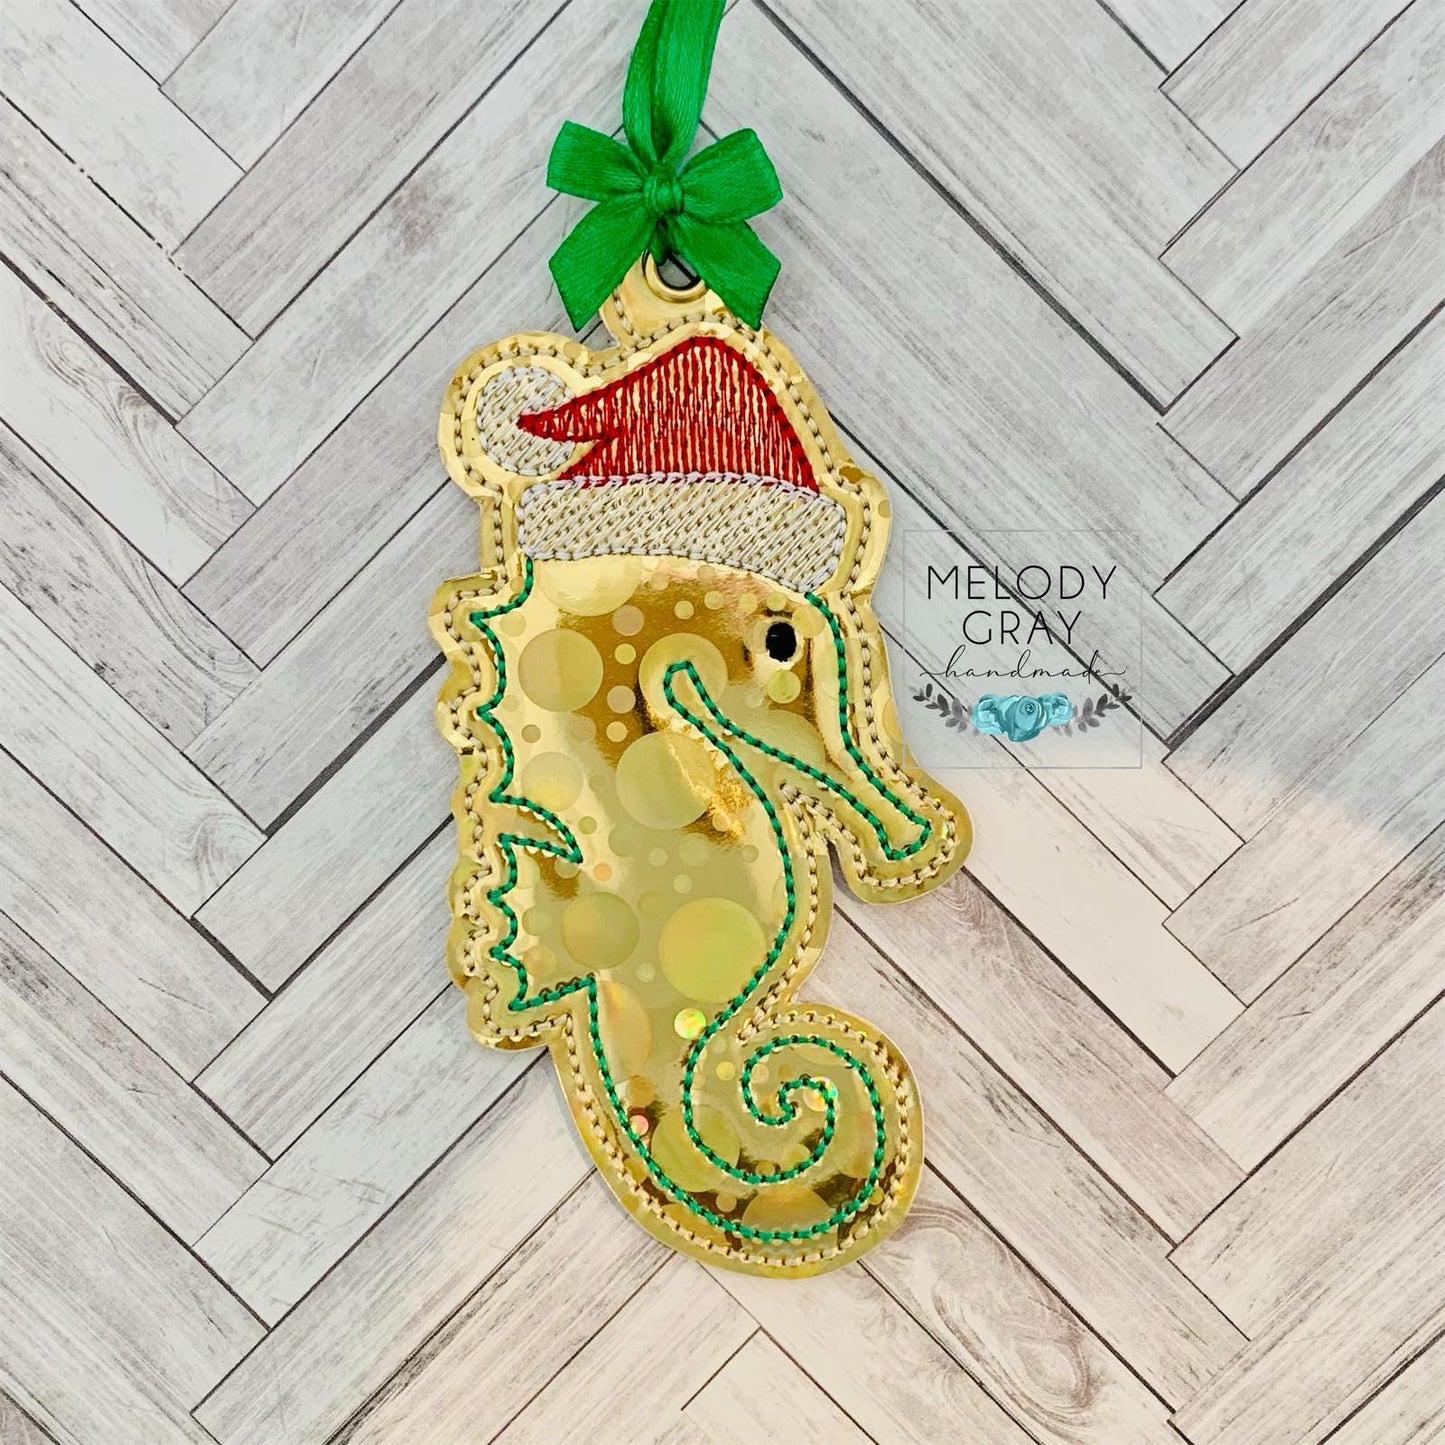 Santa Seahorse Ornament - Digital Embroidery Design